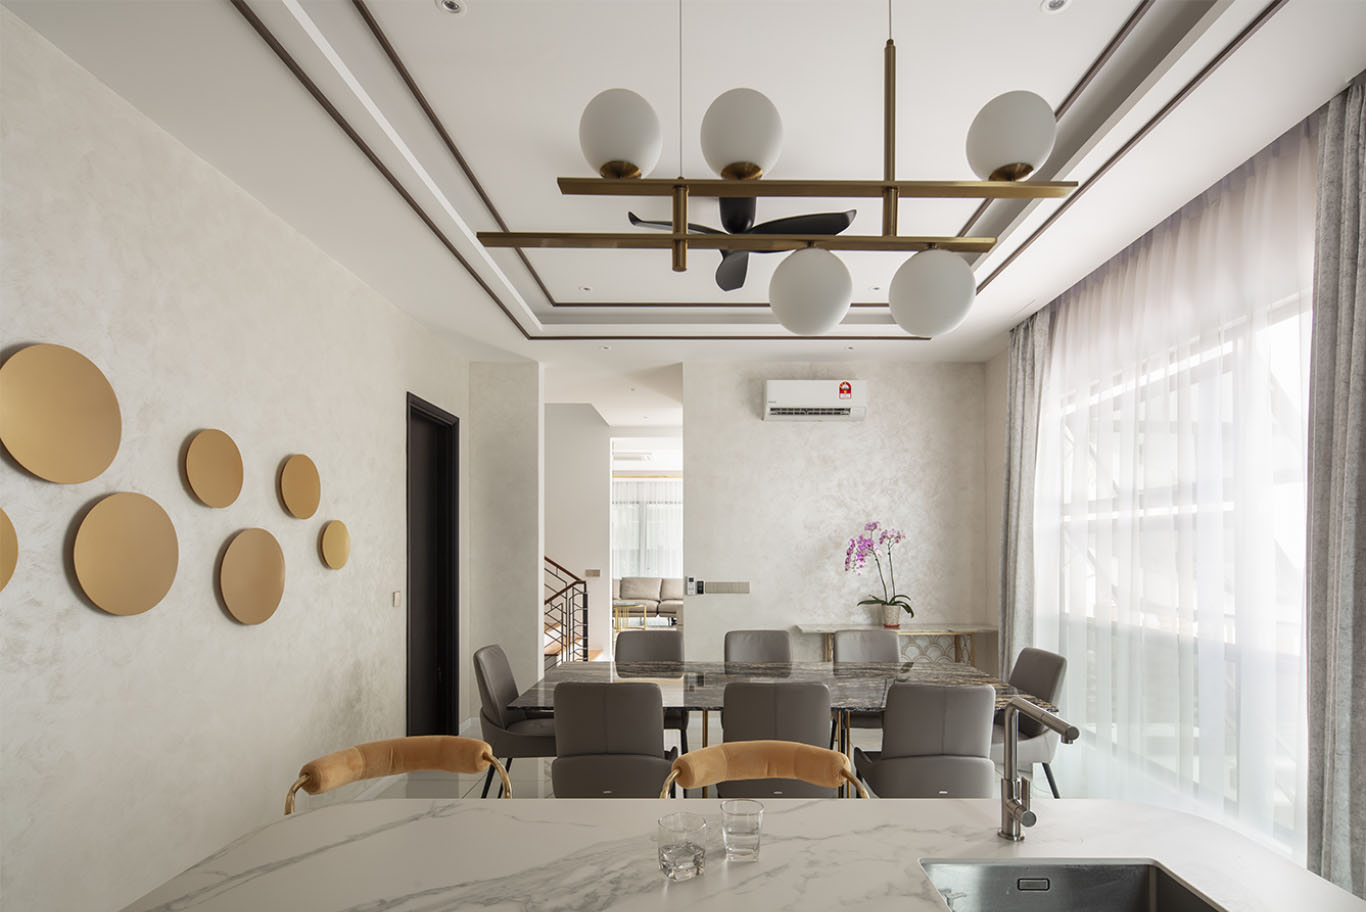 MIEUX La Famillie De Lee minimalist dining area beside luxury indoor mini bar mieux interior design